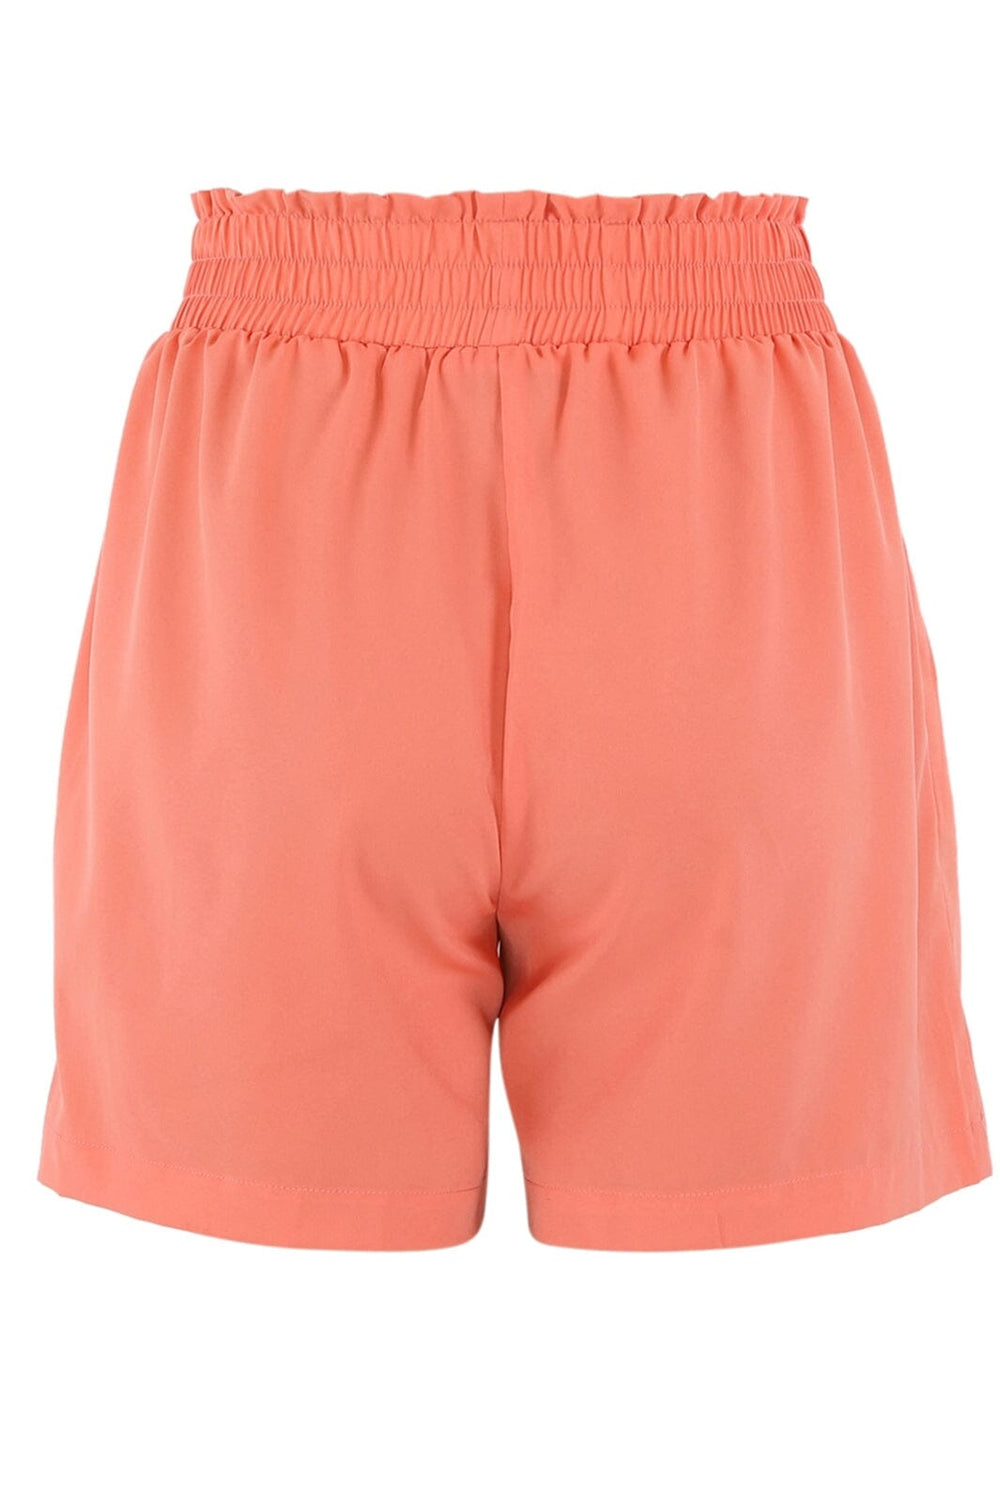 Forudbestilling - Continue - Elis Shorts - 411 Burned Orange Shorts 